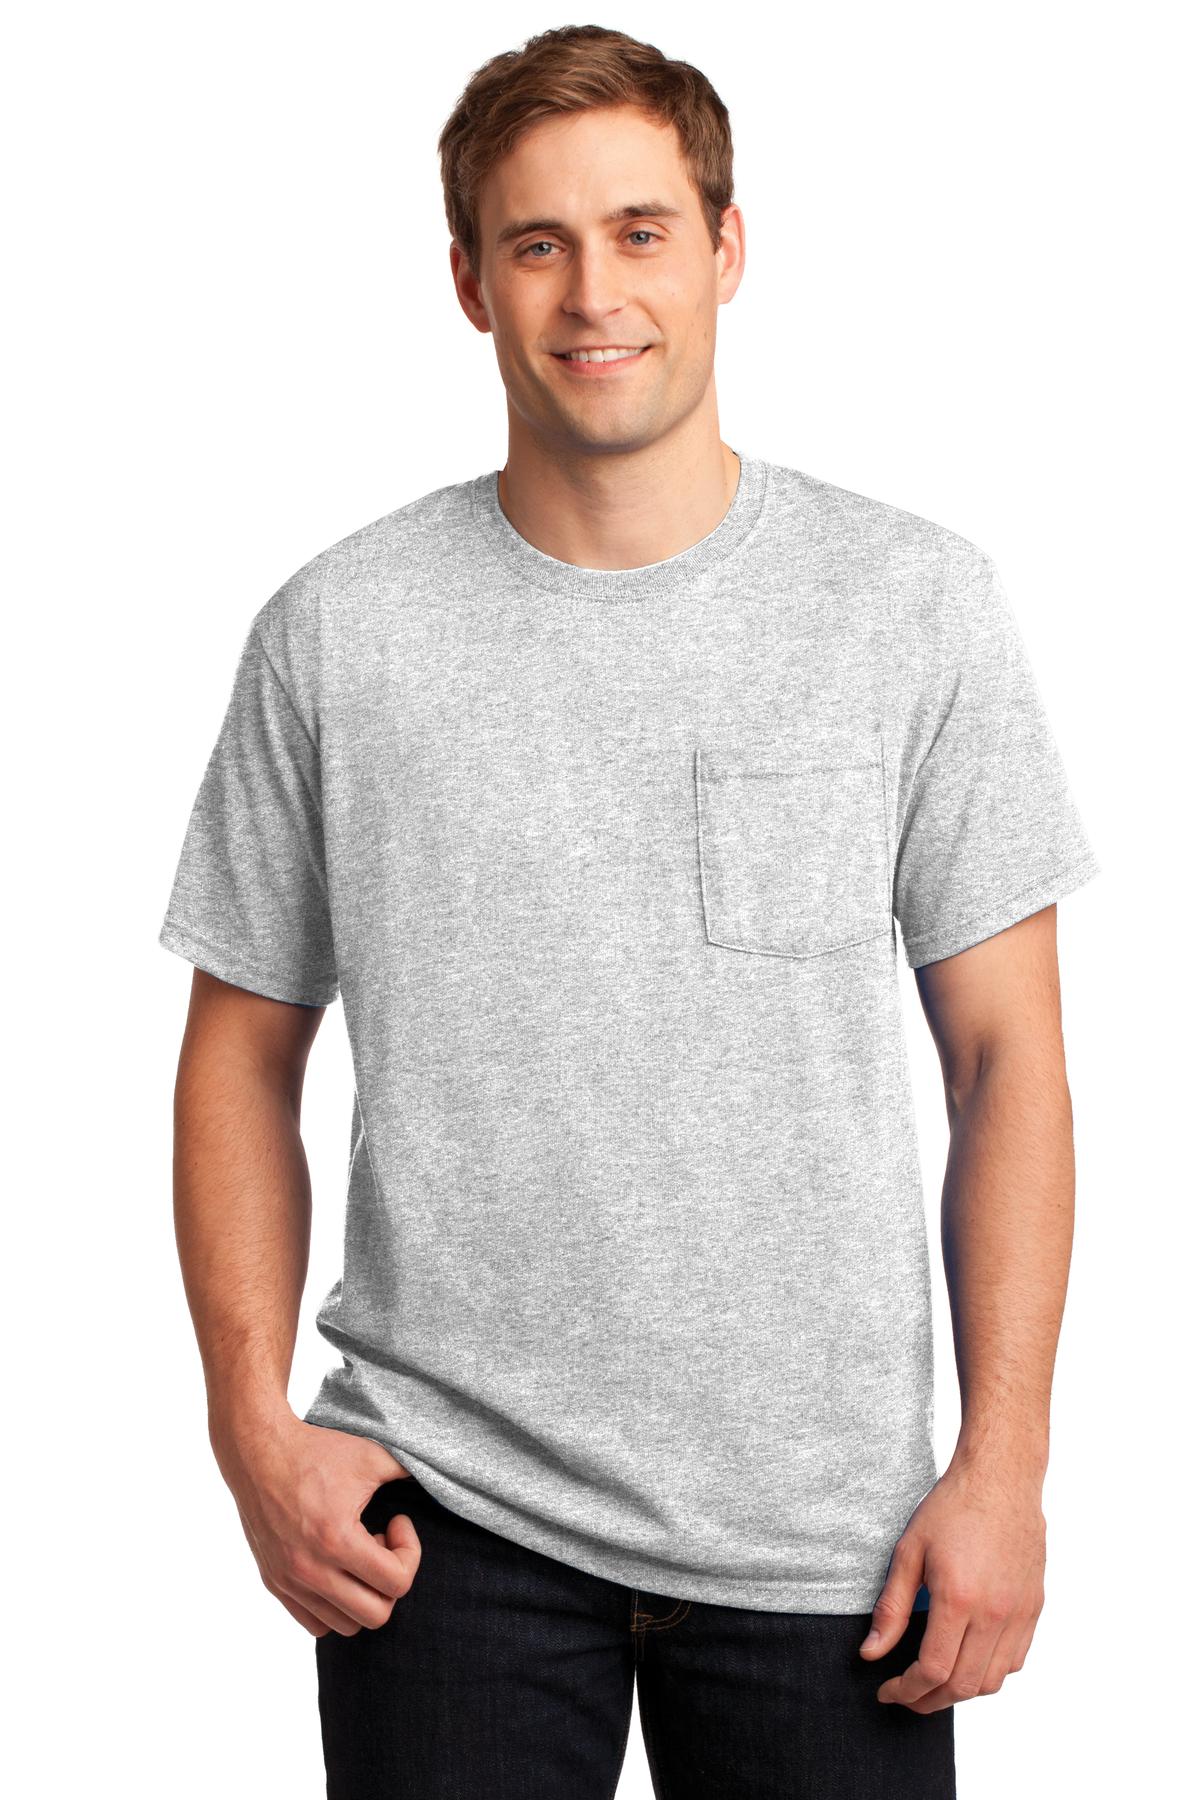 JERZEES® - Dri-Power® 50/50 Cotton/Poly Pocket T-Shirt. 29MP - DFW Impression